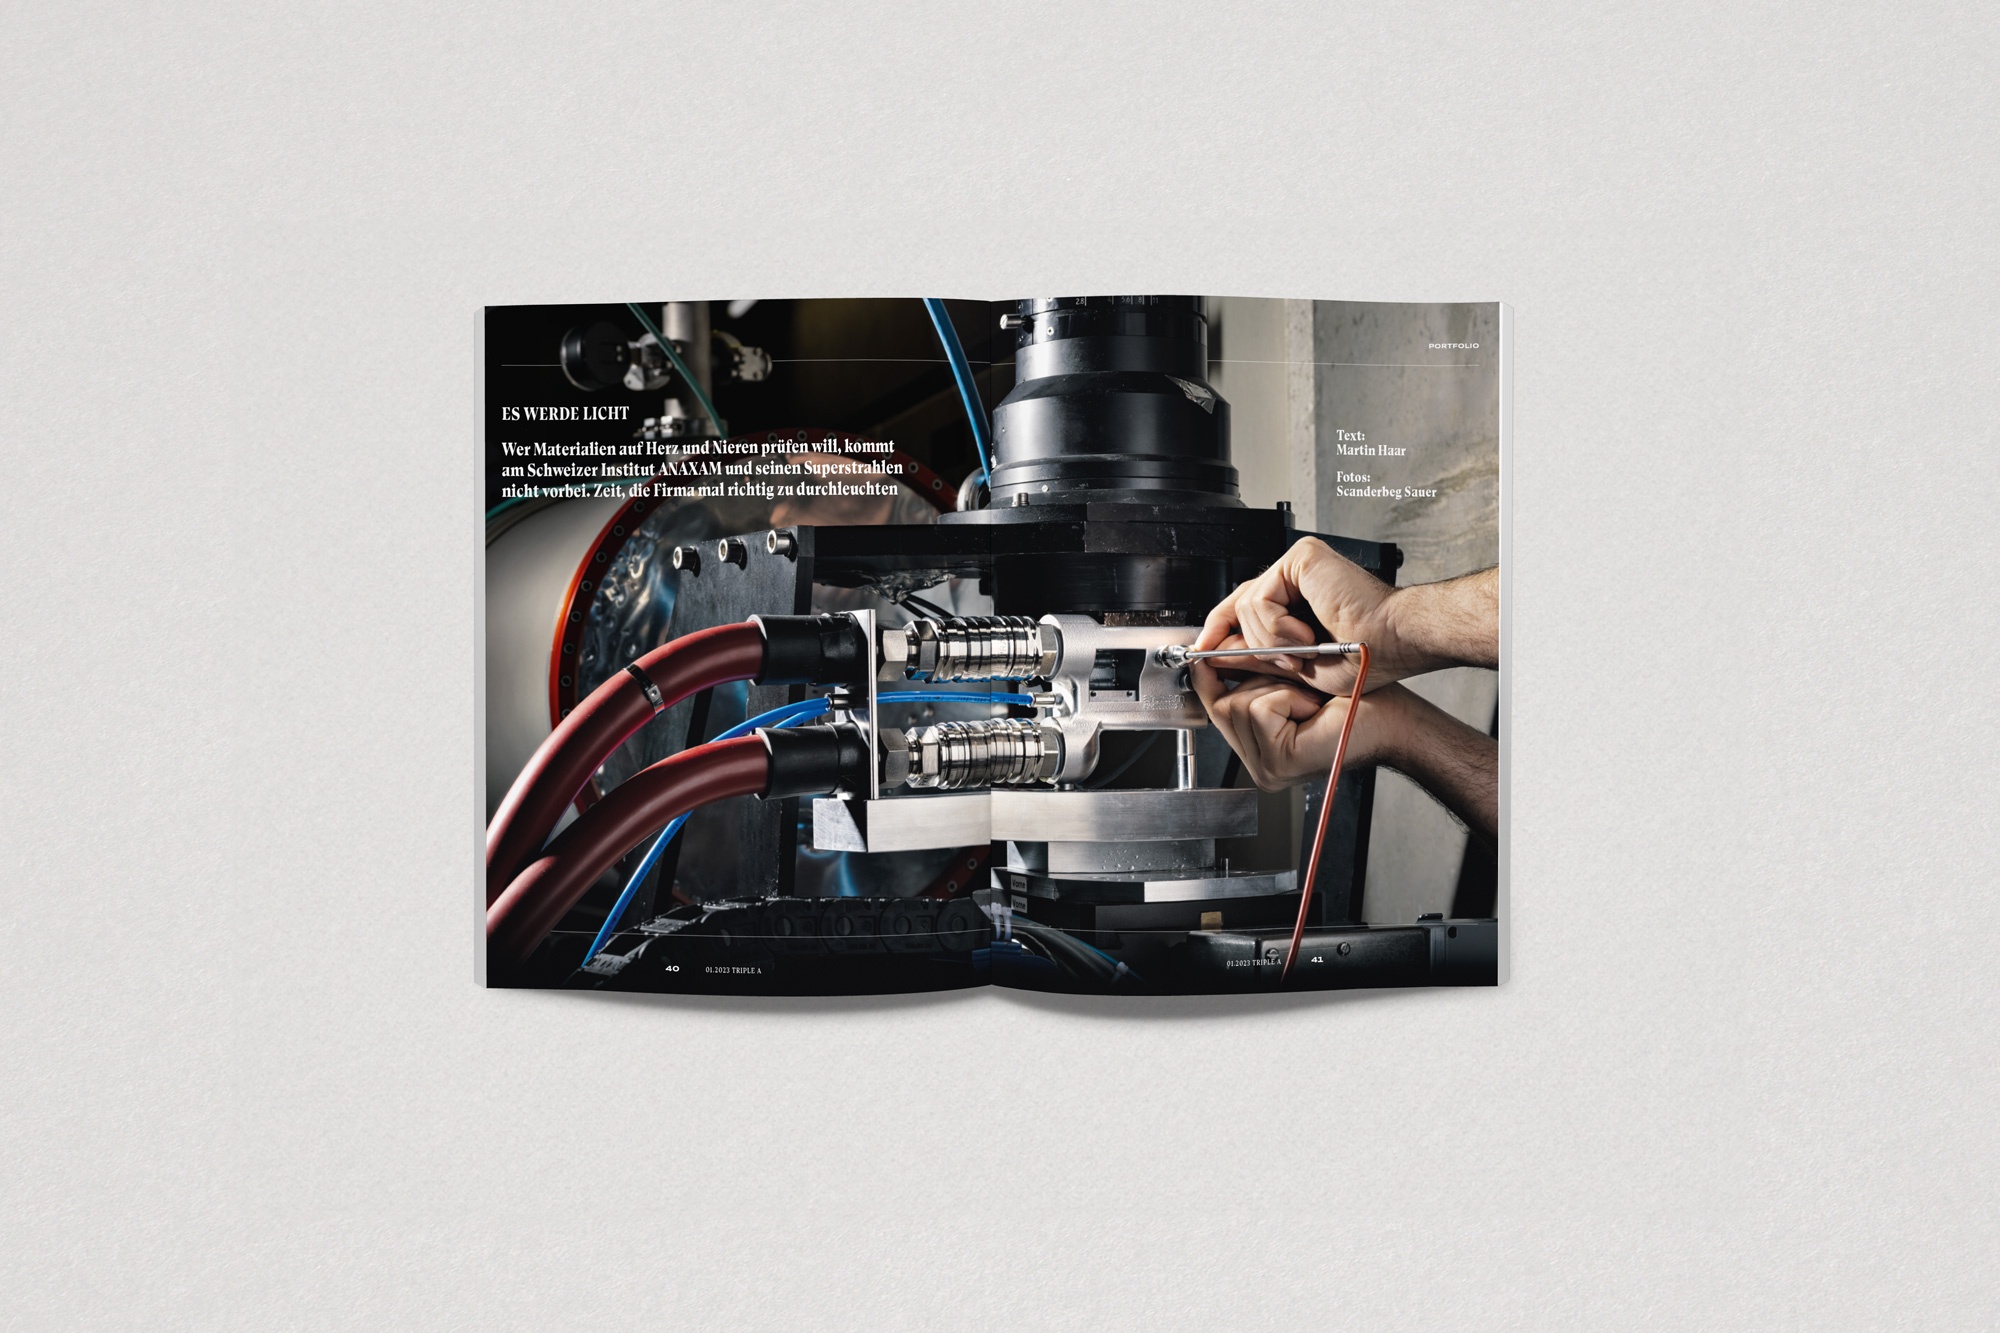 Stuttgarter Zeitung magazine economy TripleA layout photography by Scanderberg & Sauer